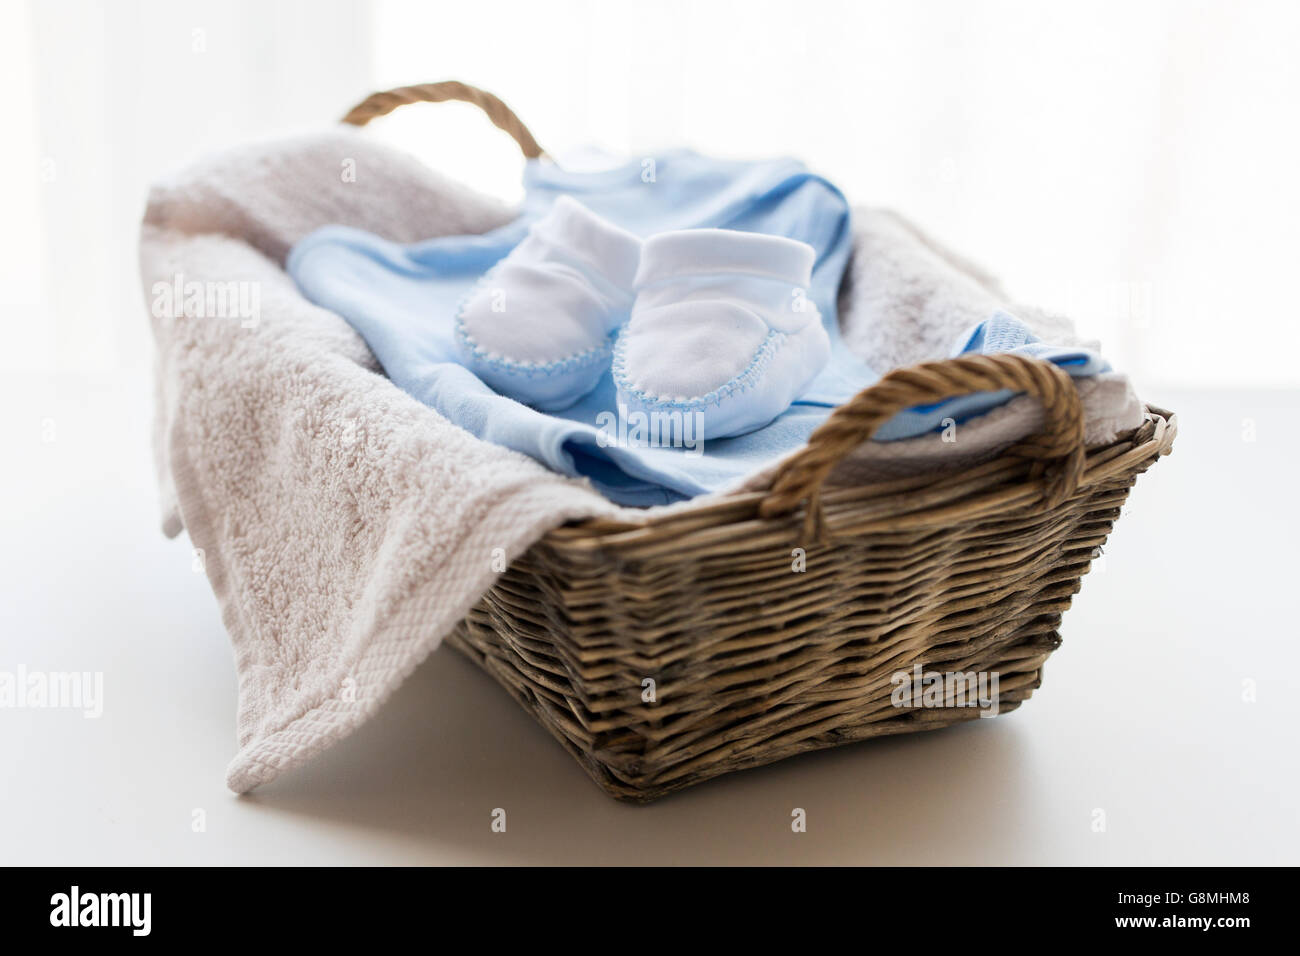 Amazon.com: NTAOHAMPER 2 Pack Pink Laundry Basket,Canvas Baby Clothes  Hamper,Kids Toys Storage Basket Gift Basket with Handles,Baby Nursery,Room  Decor,Bedroom,Bathroom,Playroom : Baby